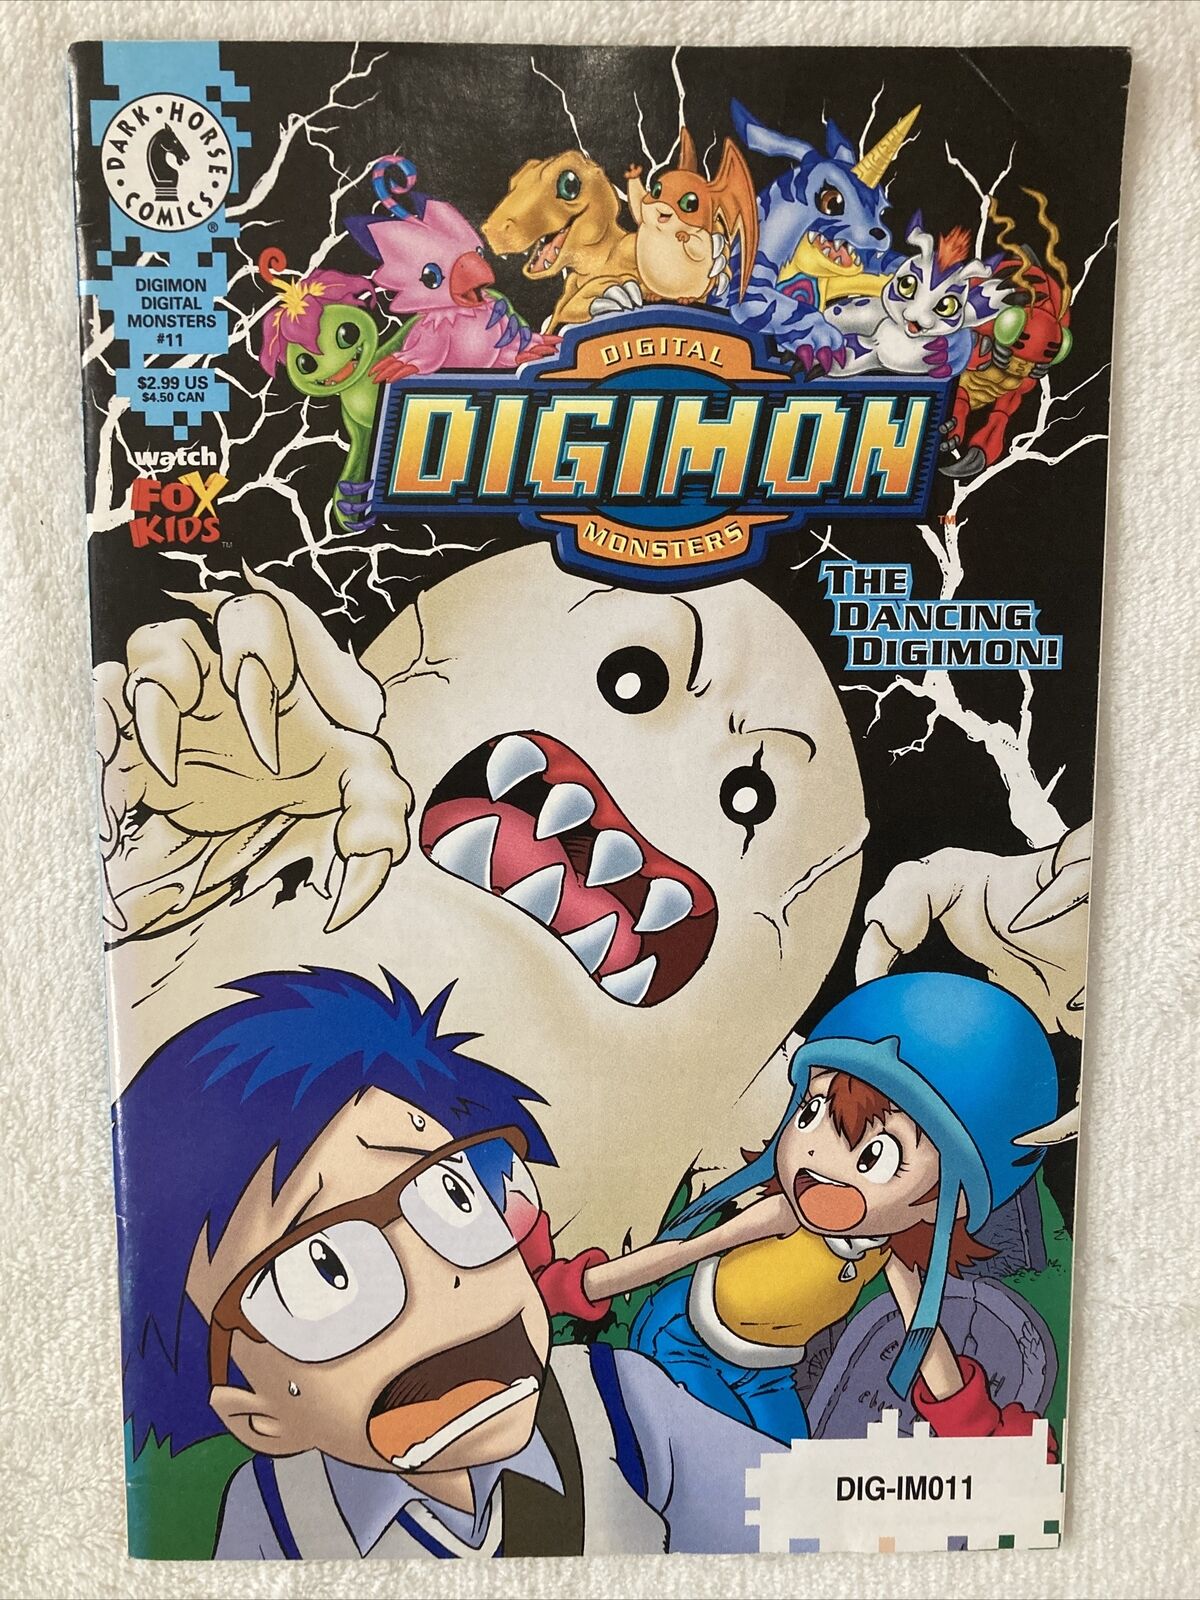 Dark Horse Comic Digimon Digital Monsters #11 The Dancing Digimon Bakemon